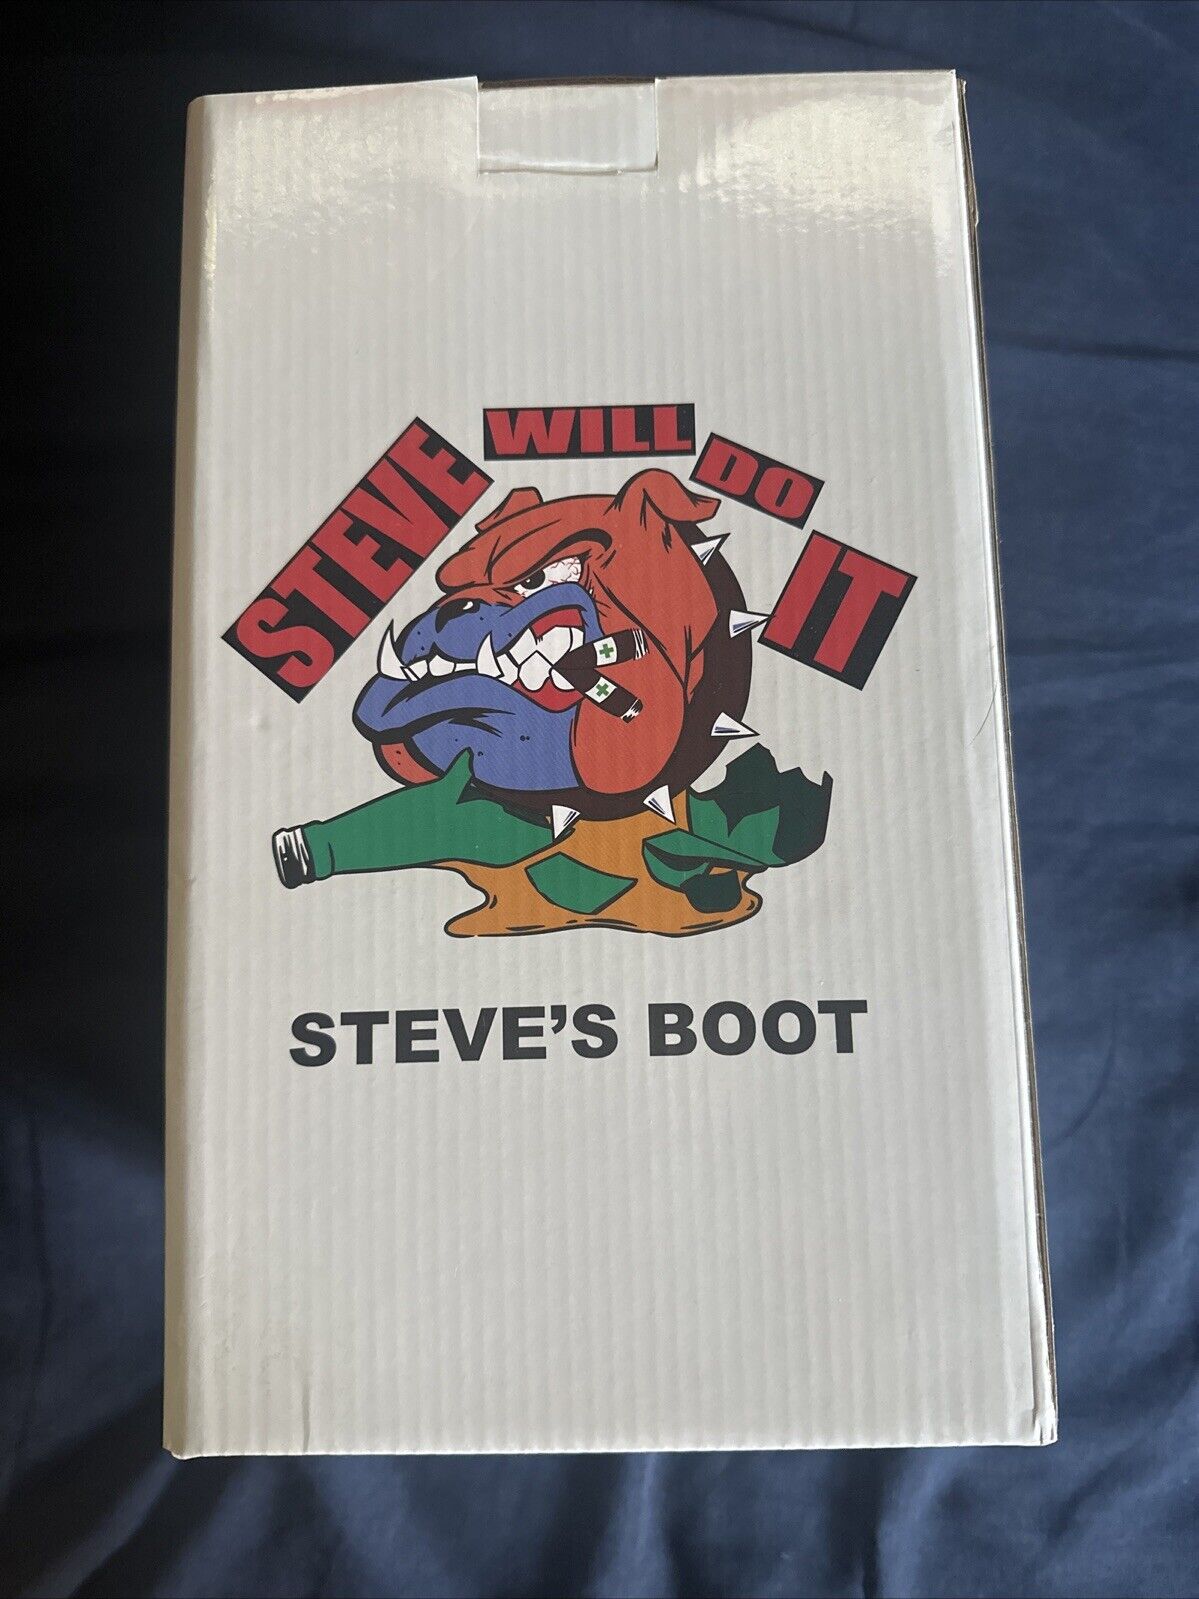 Steve Will Do It Boot Brand New in Box